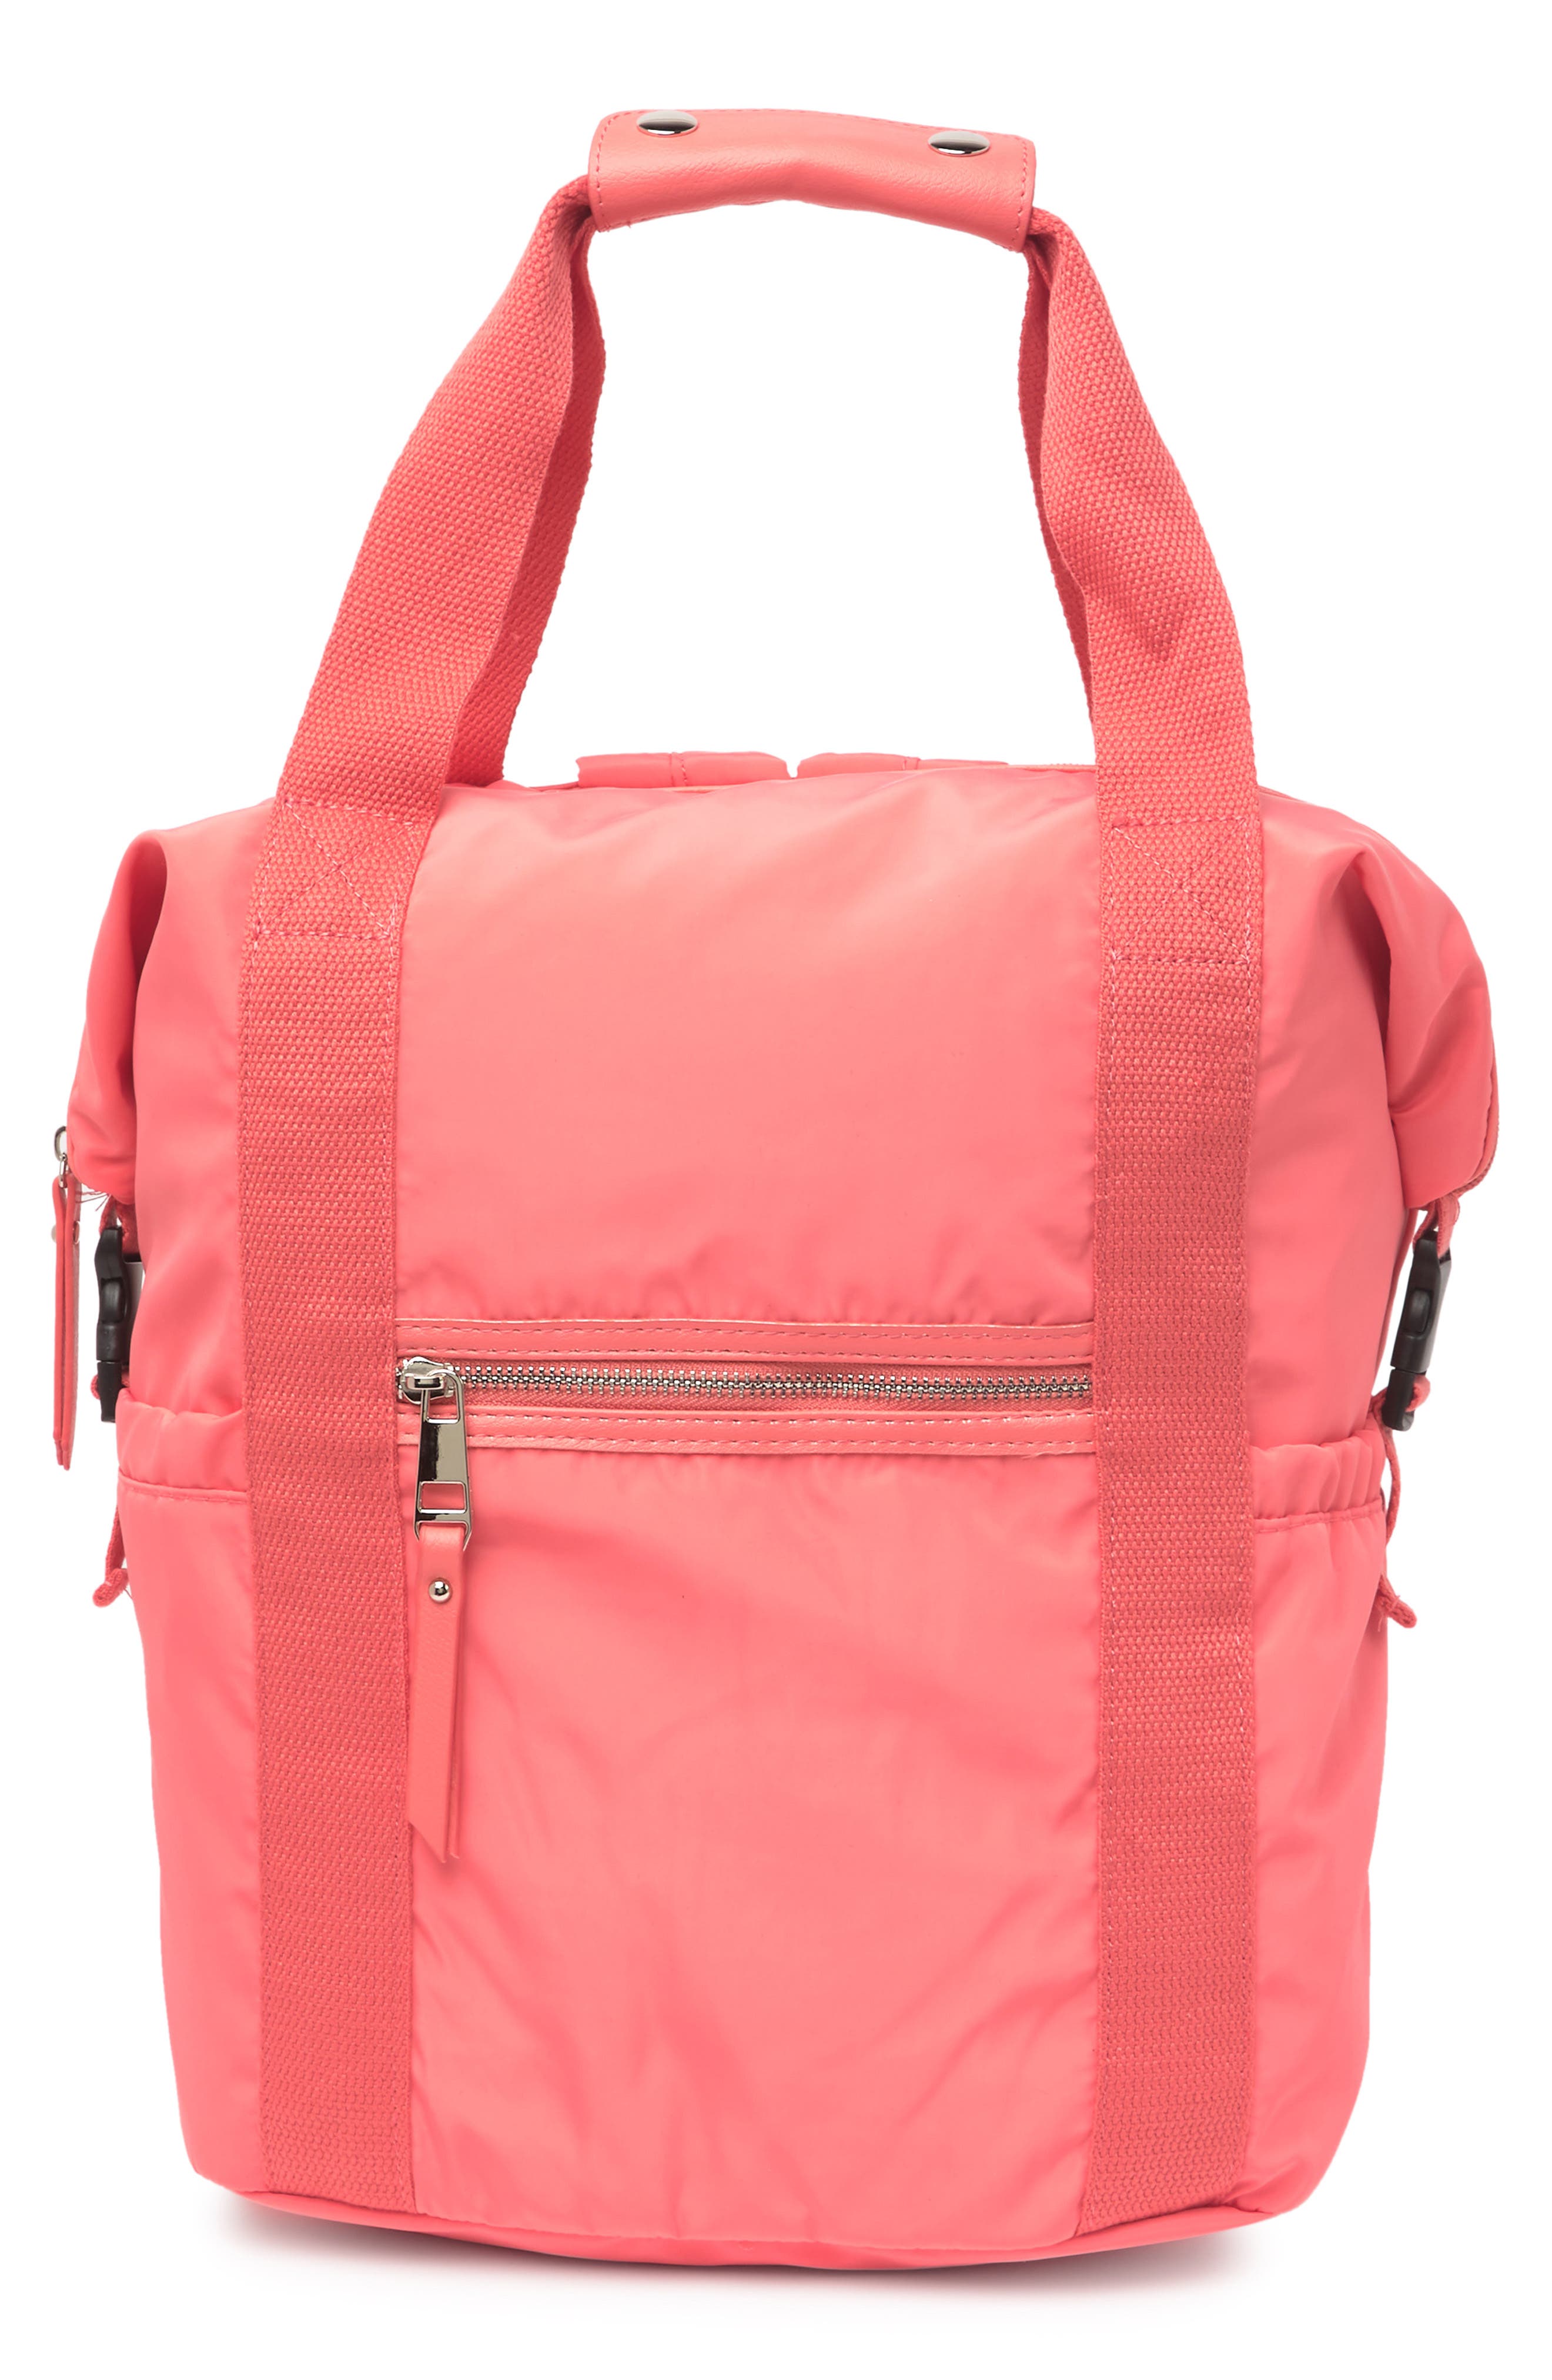 Madden Girl Booker School Backpack In Medium Pink